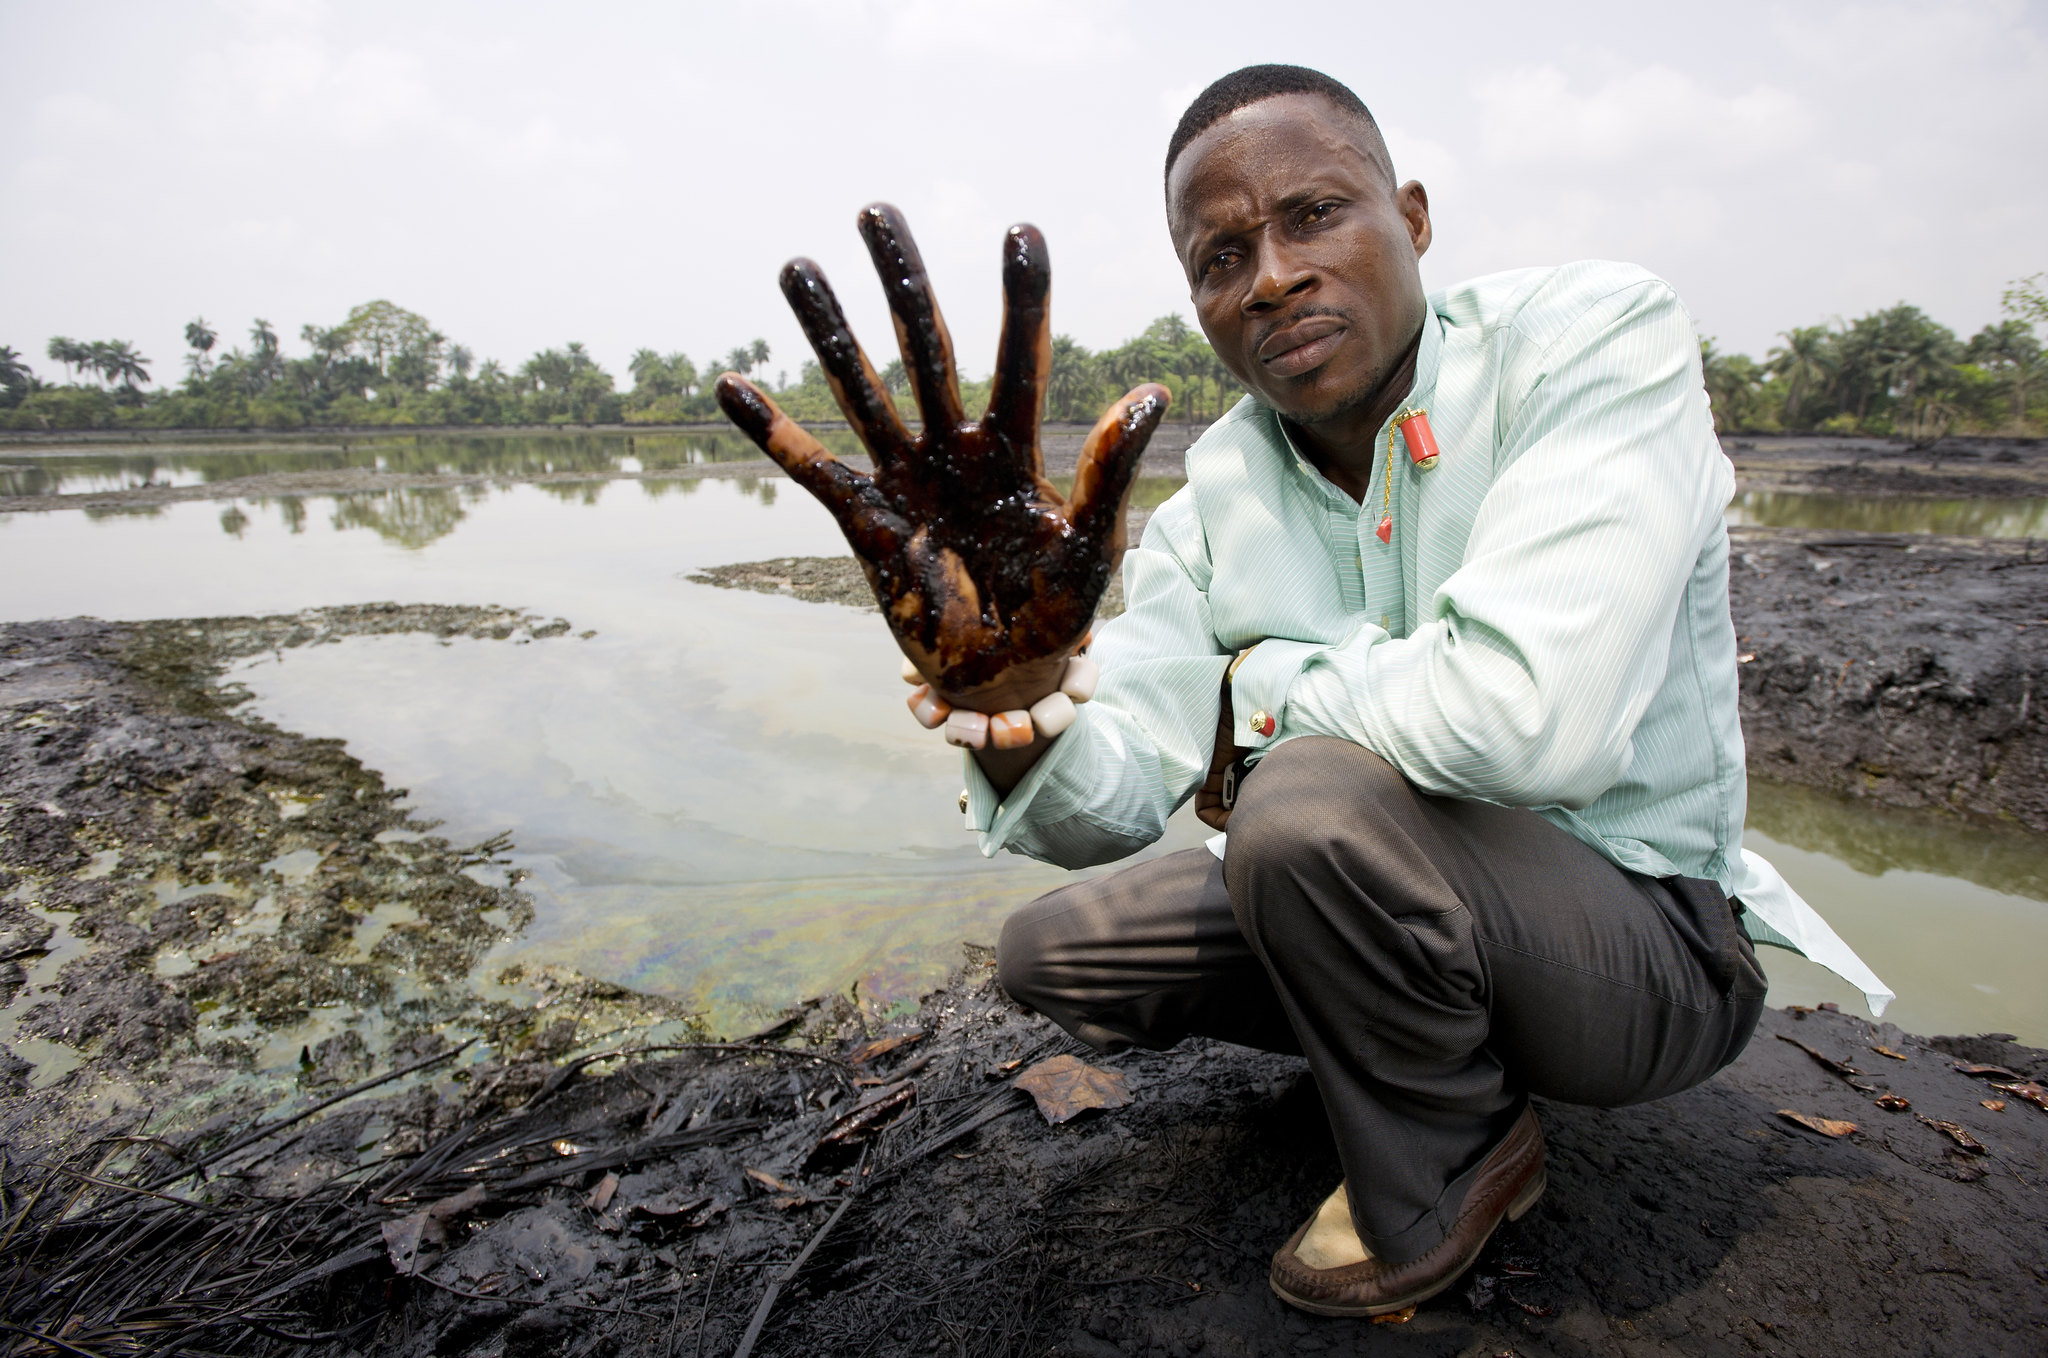 Shell wast handen in onschuld bij olievervuiling in Nigeria